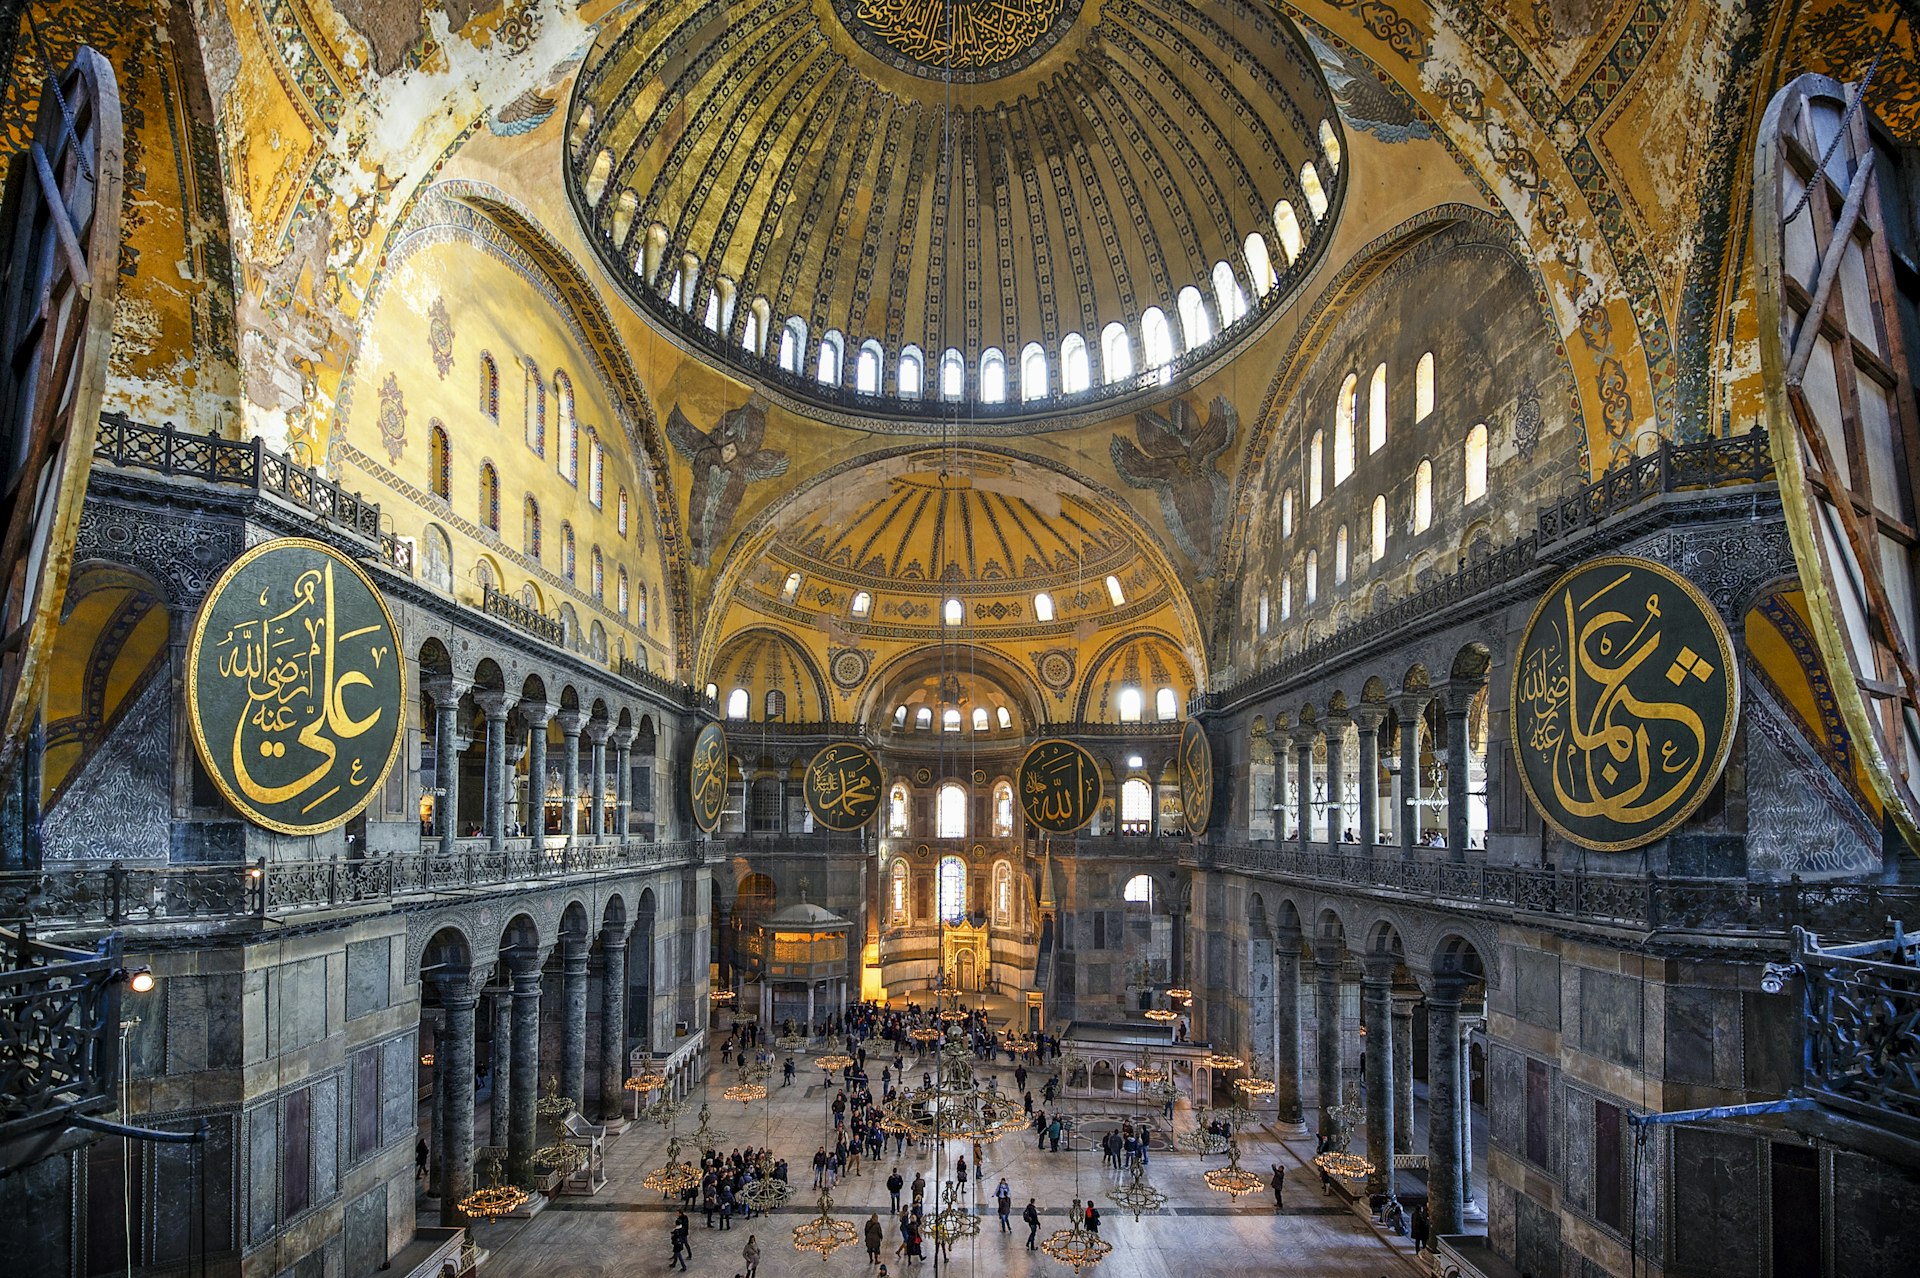 The ornate interior of the Hagia Sophia in Istanbul